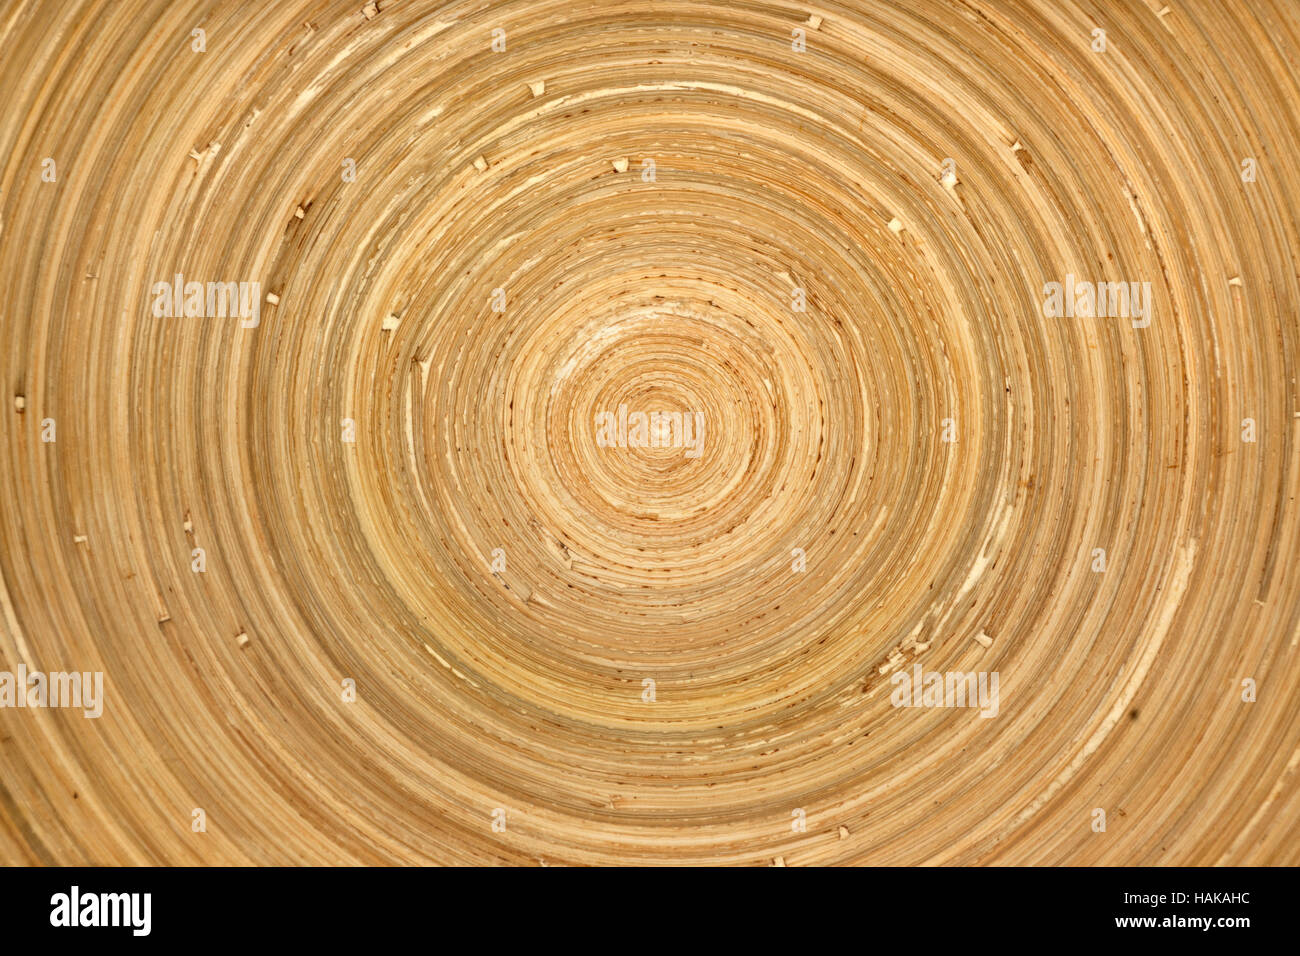 Circular pattern on wooden surface Stock Photo